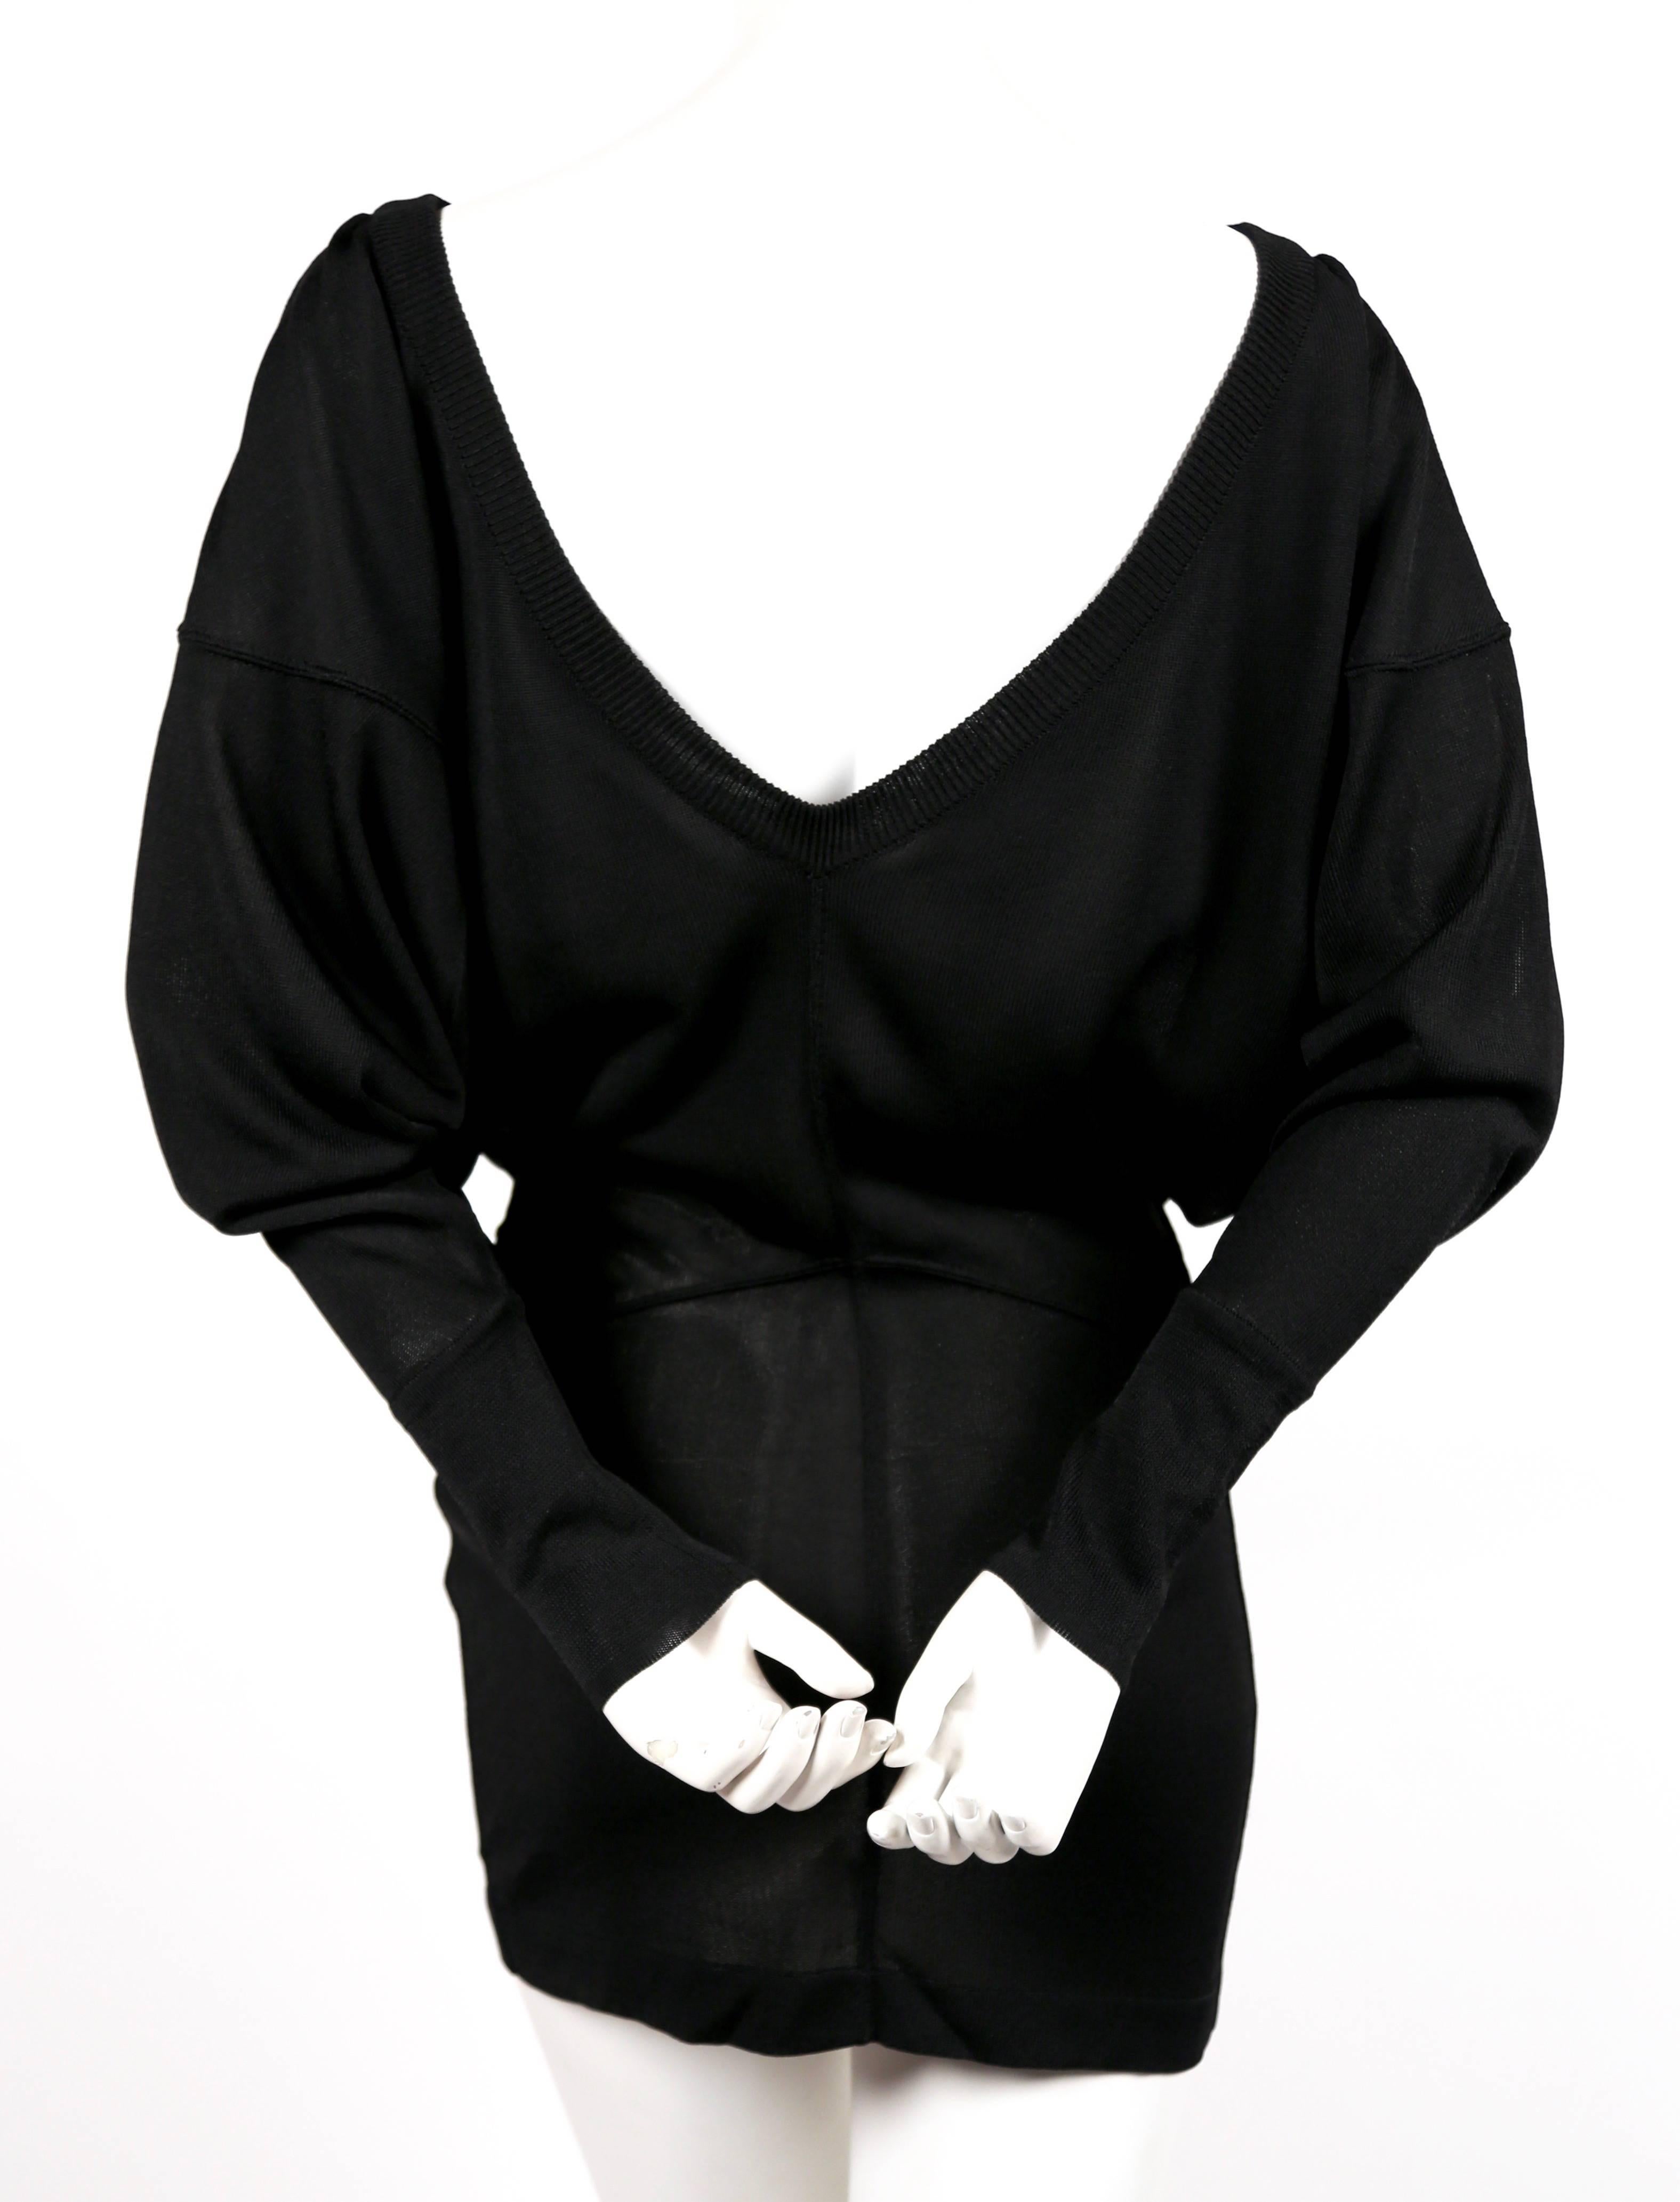 Women's 1980's AZZEDINE ALAIA black mini dress with open V shaped back